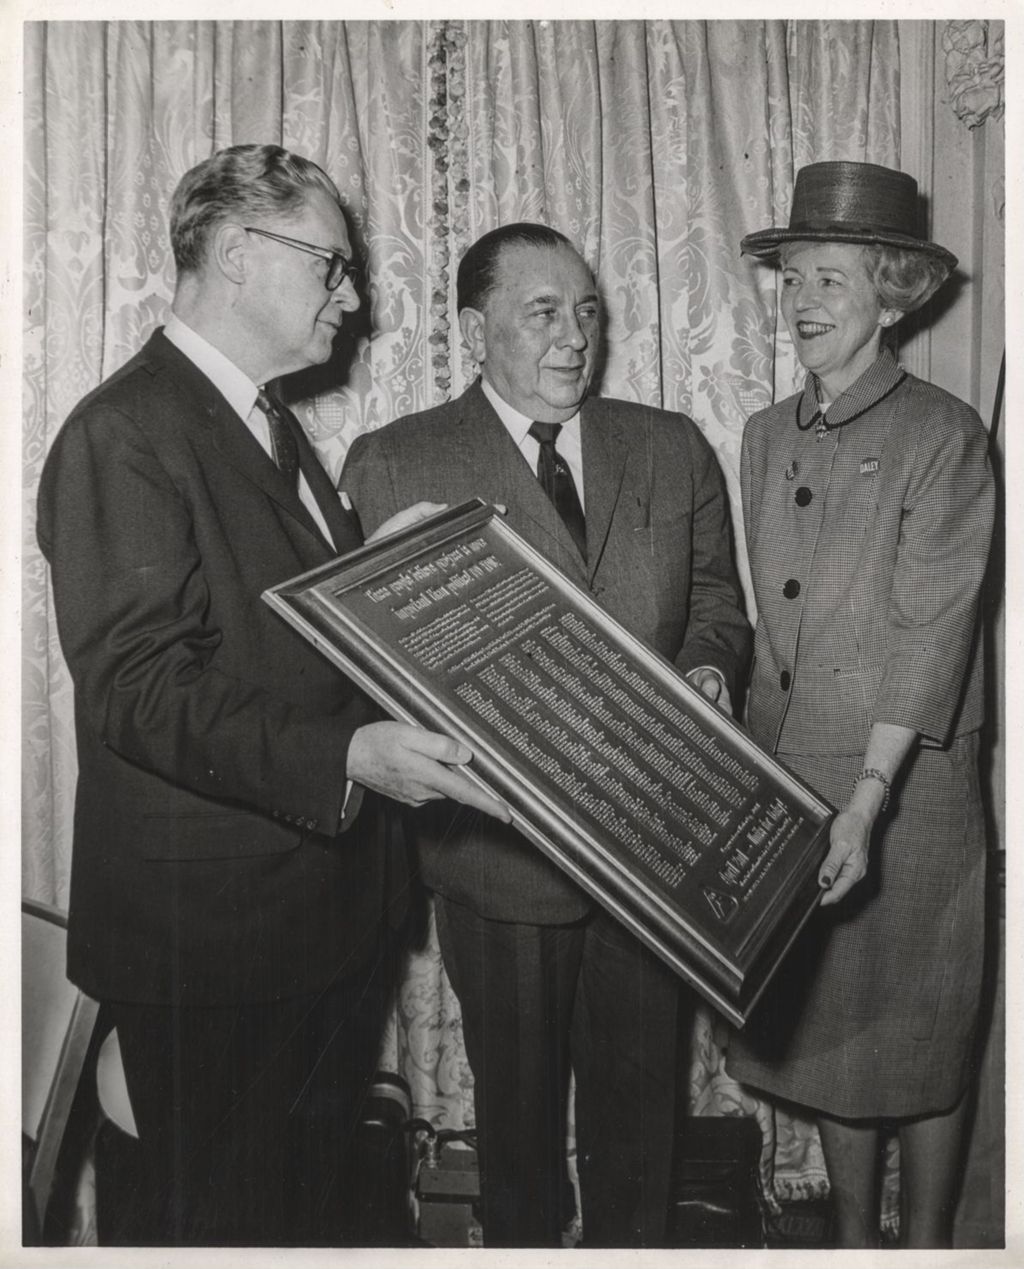 Miniature of Richard J. Daley receiving a plaque